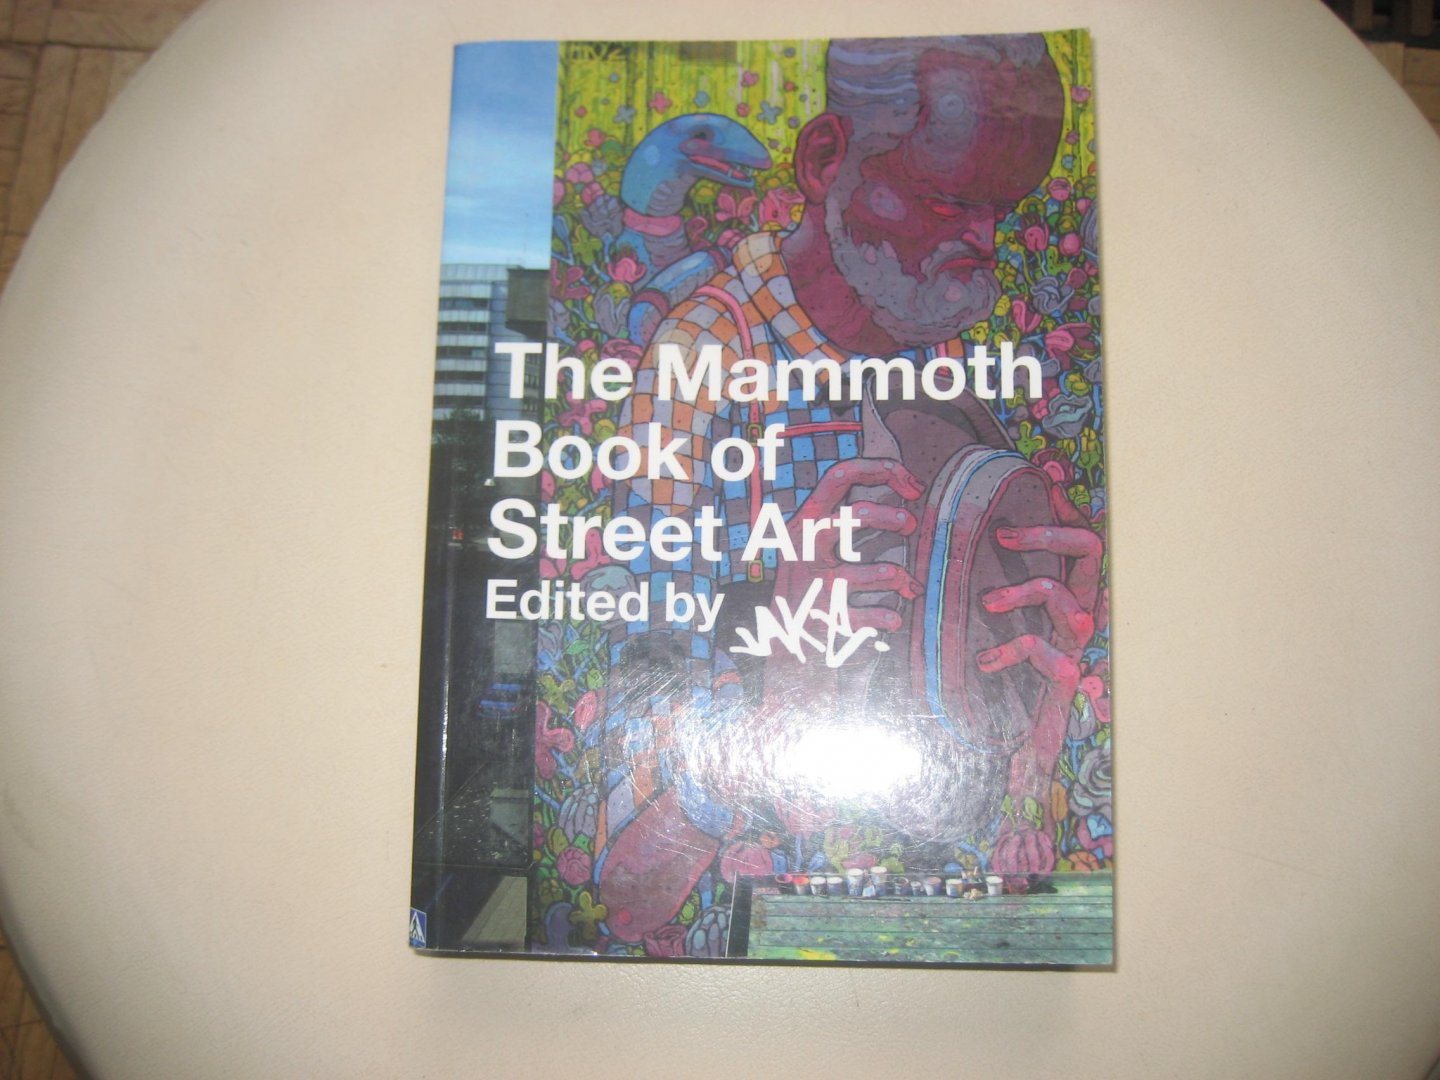 JAKe - The Mammoth Book of Street Art